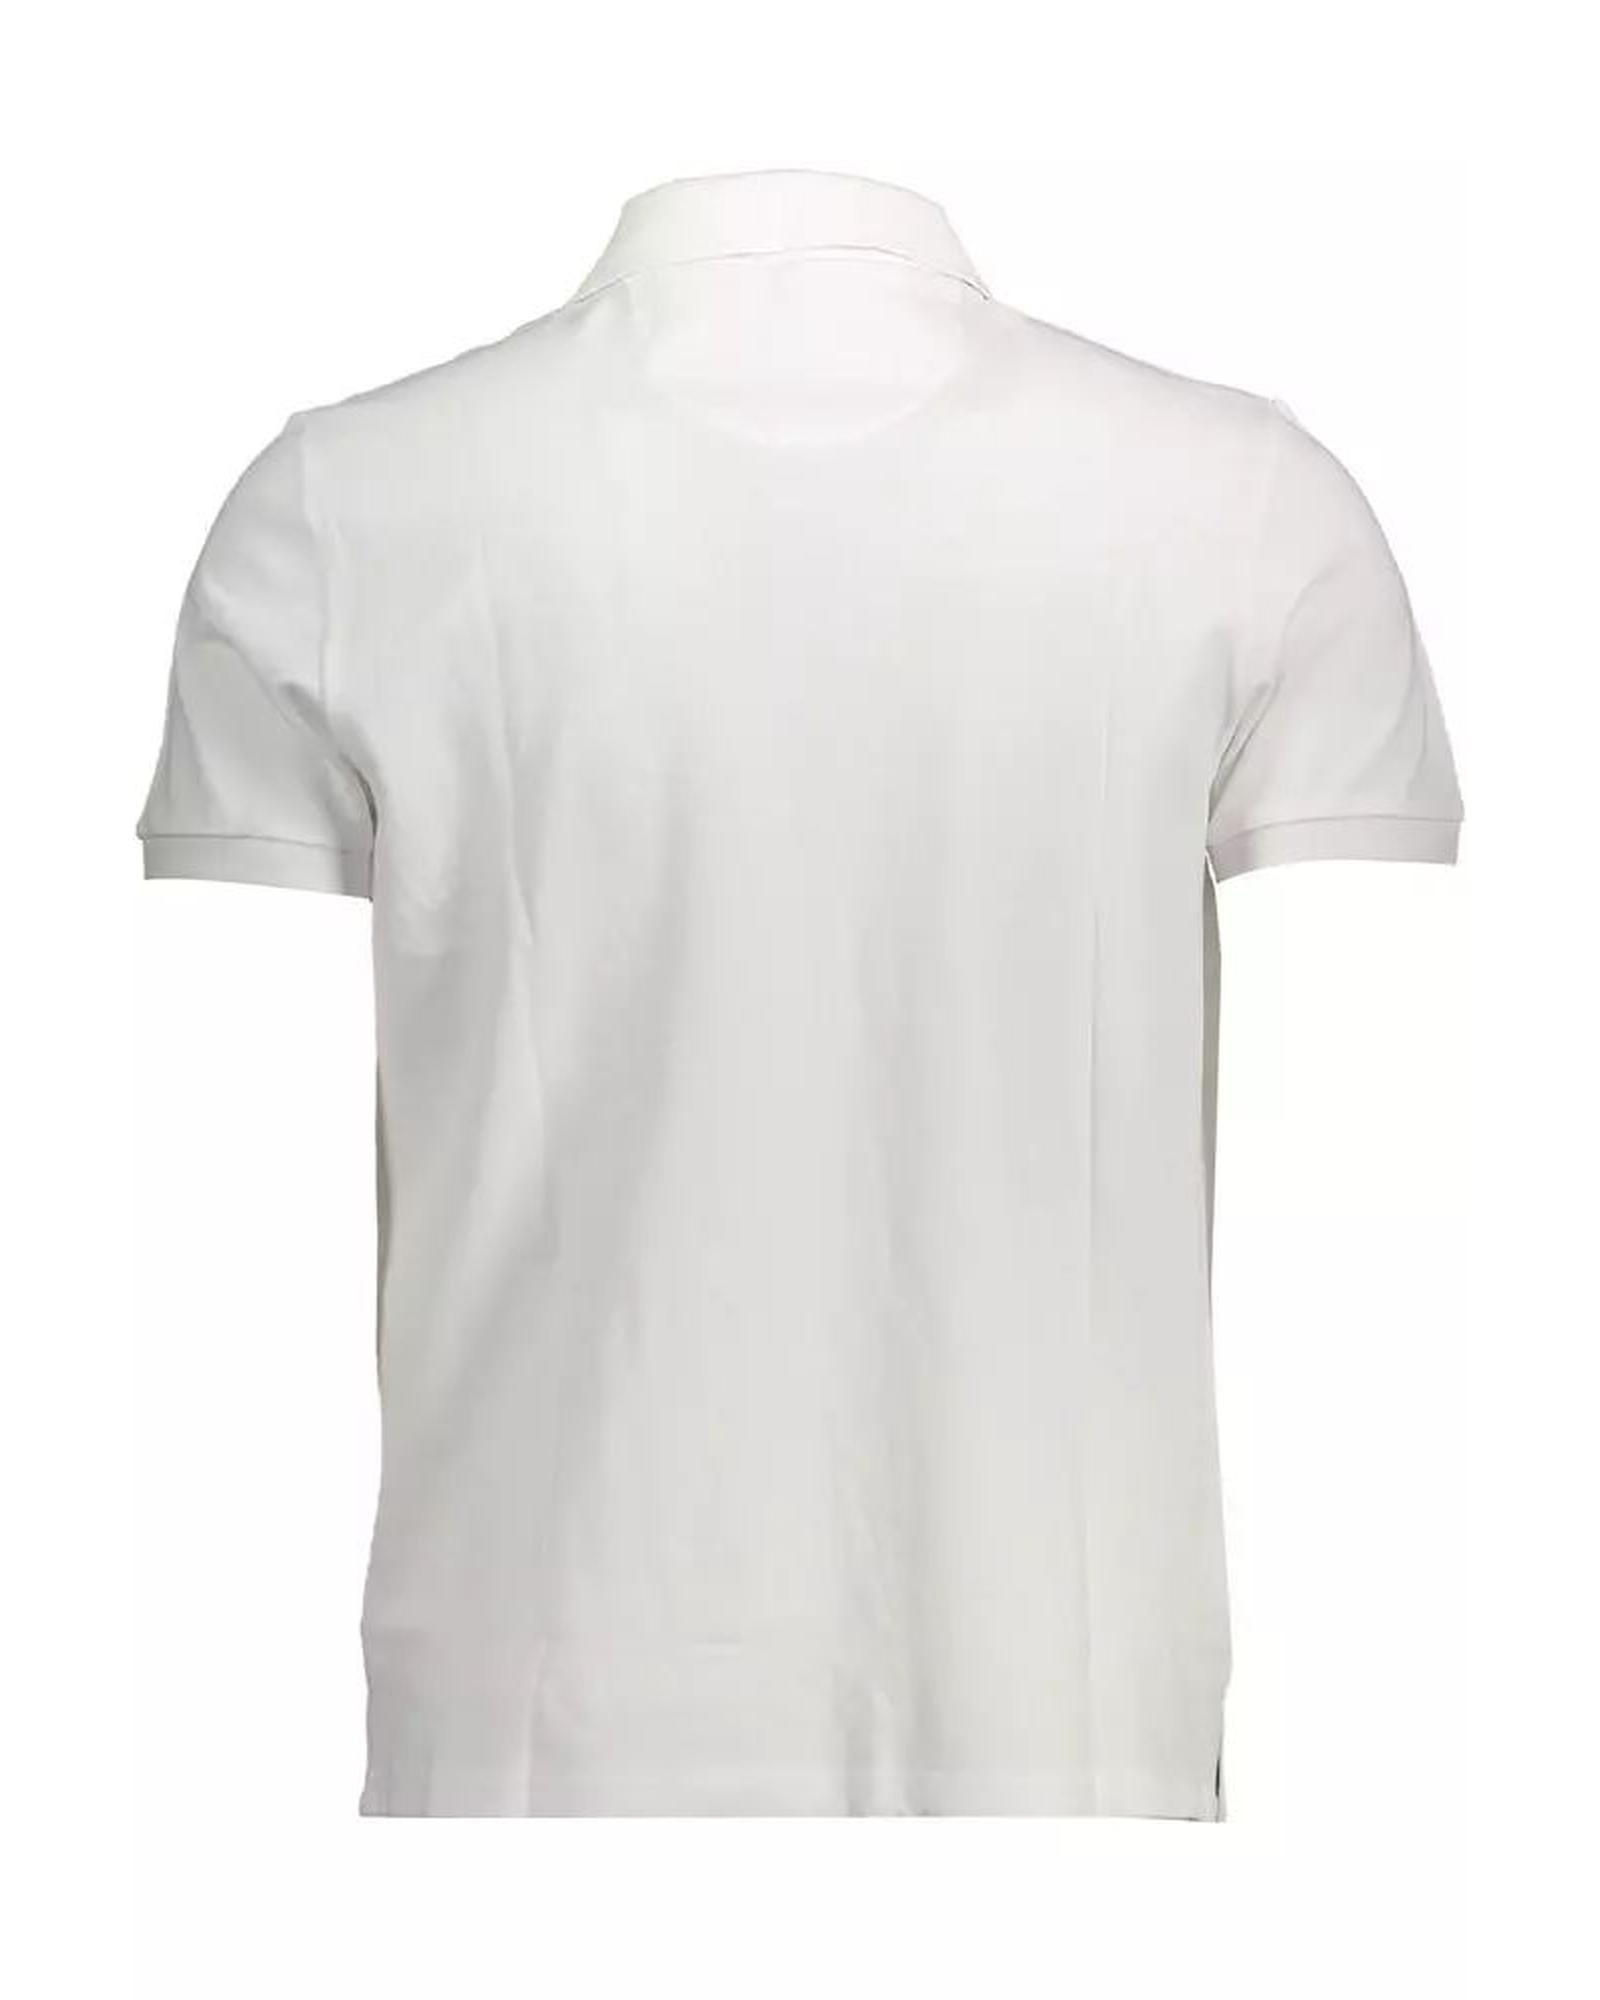 Men's White Cotton Polo Shirt - XL